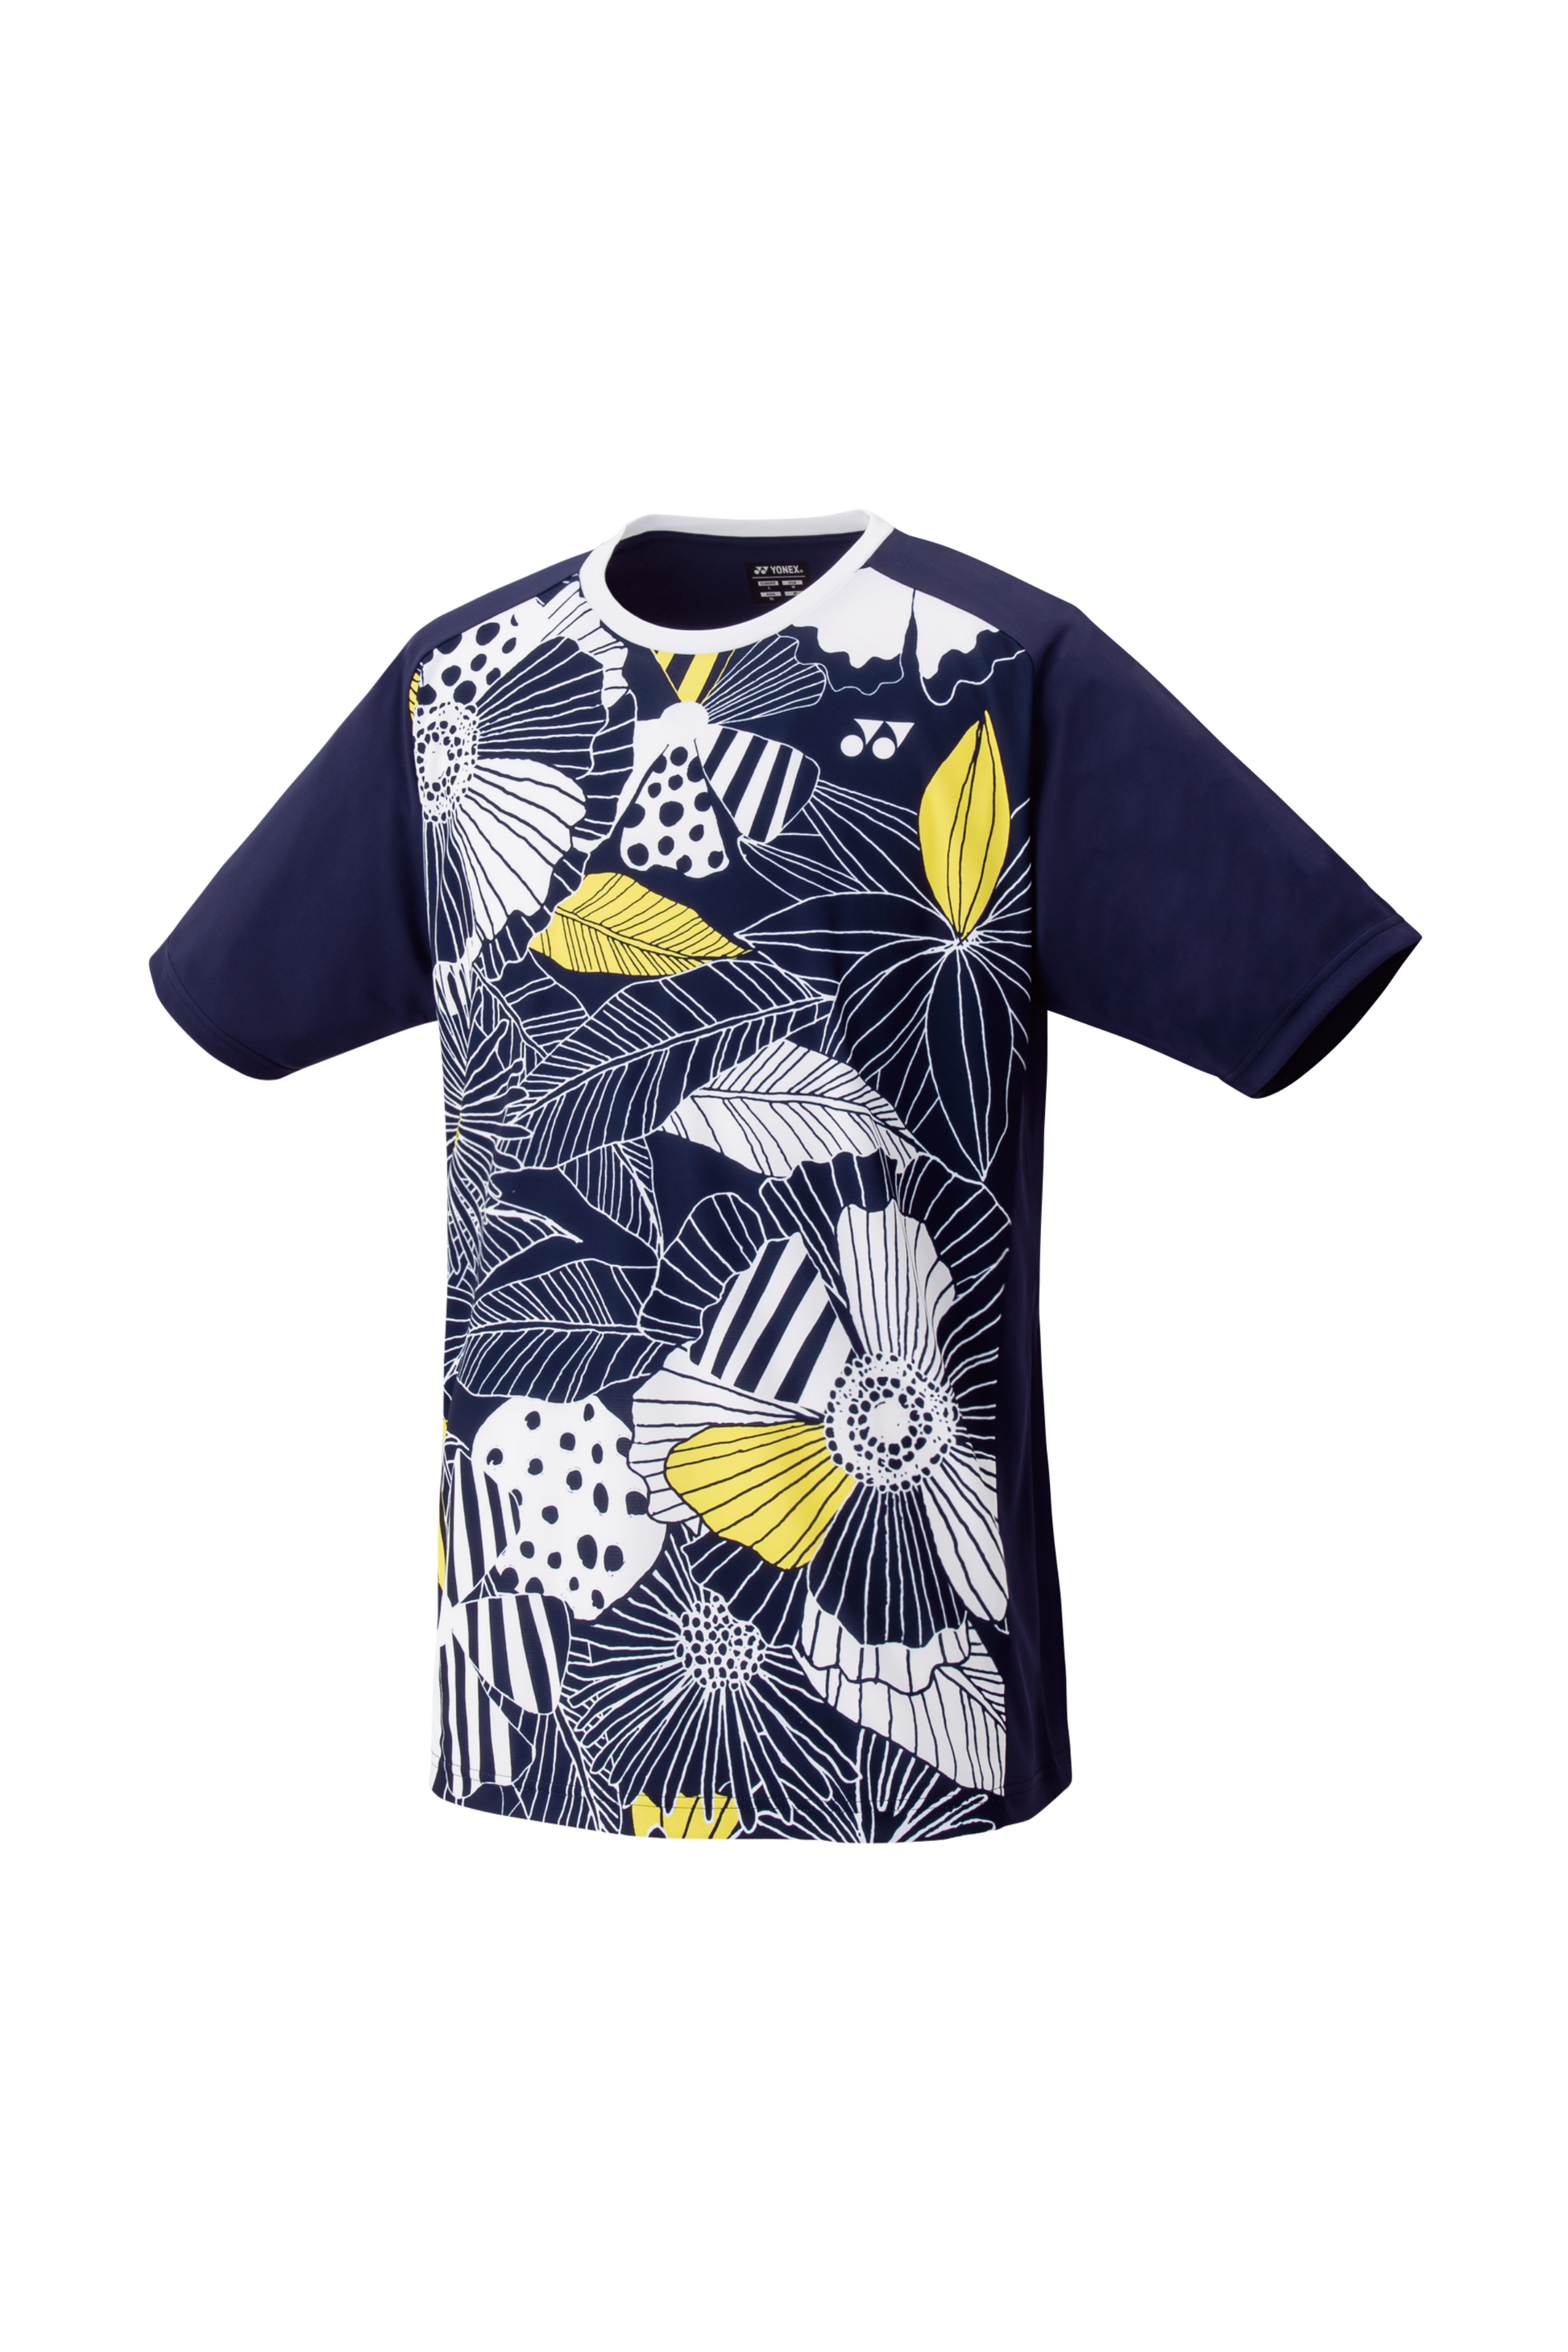 YONEX Men's Badminton Shirt 16632 GIDEON / SUKAMULJO REPLICA - Max Sports